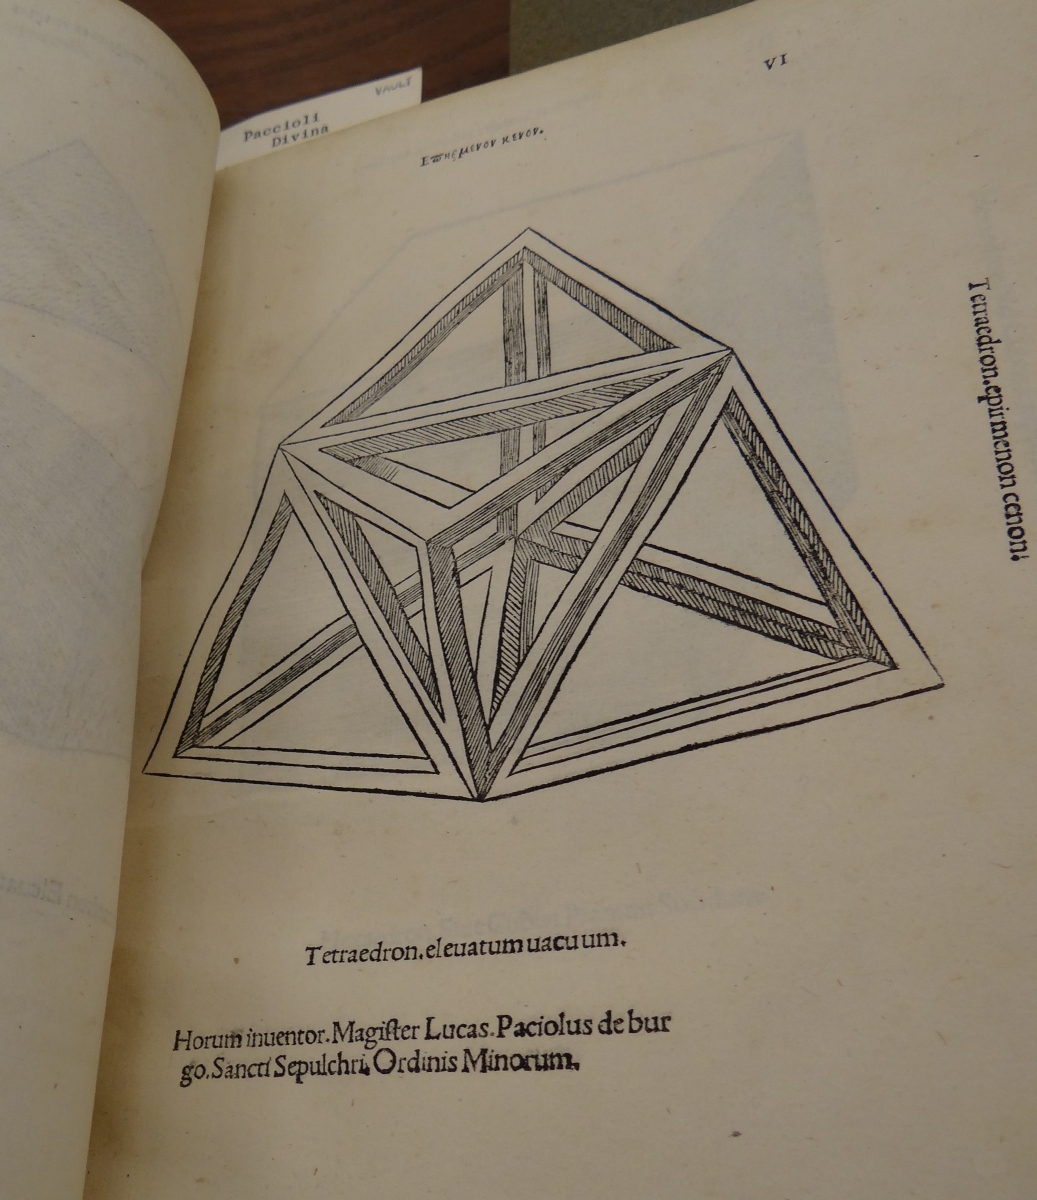 Example of polyhedron in Pacioli's 1509 Divina Proportione.